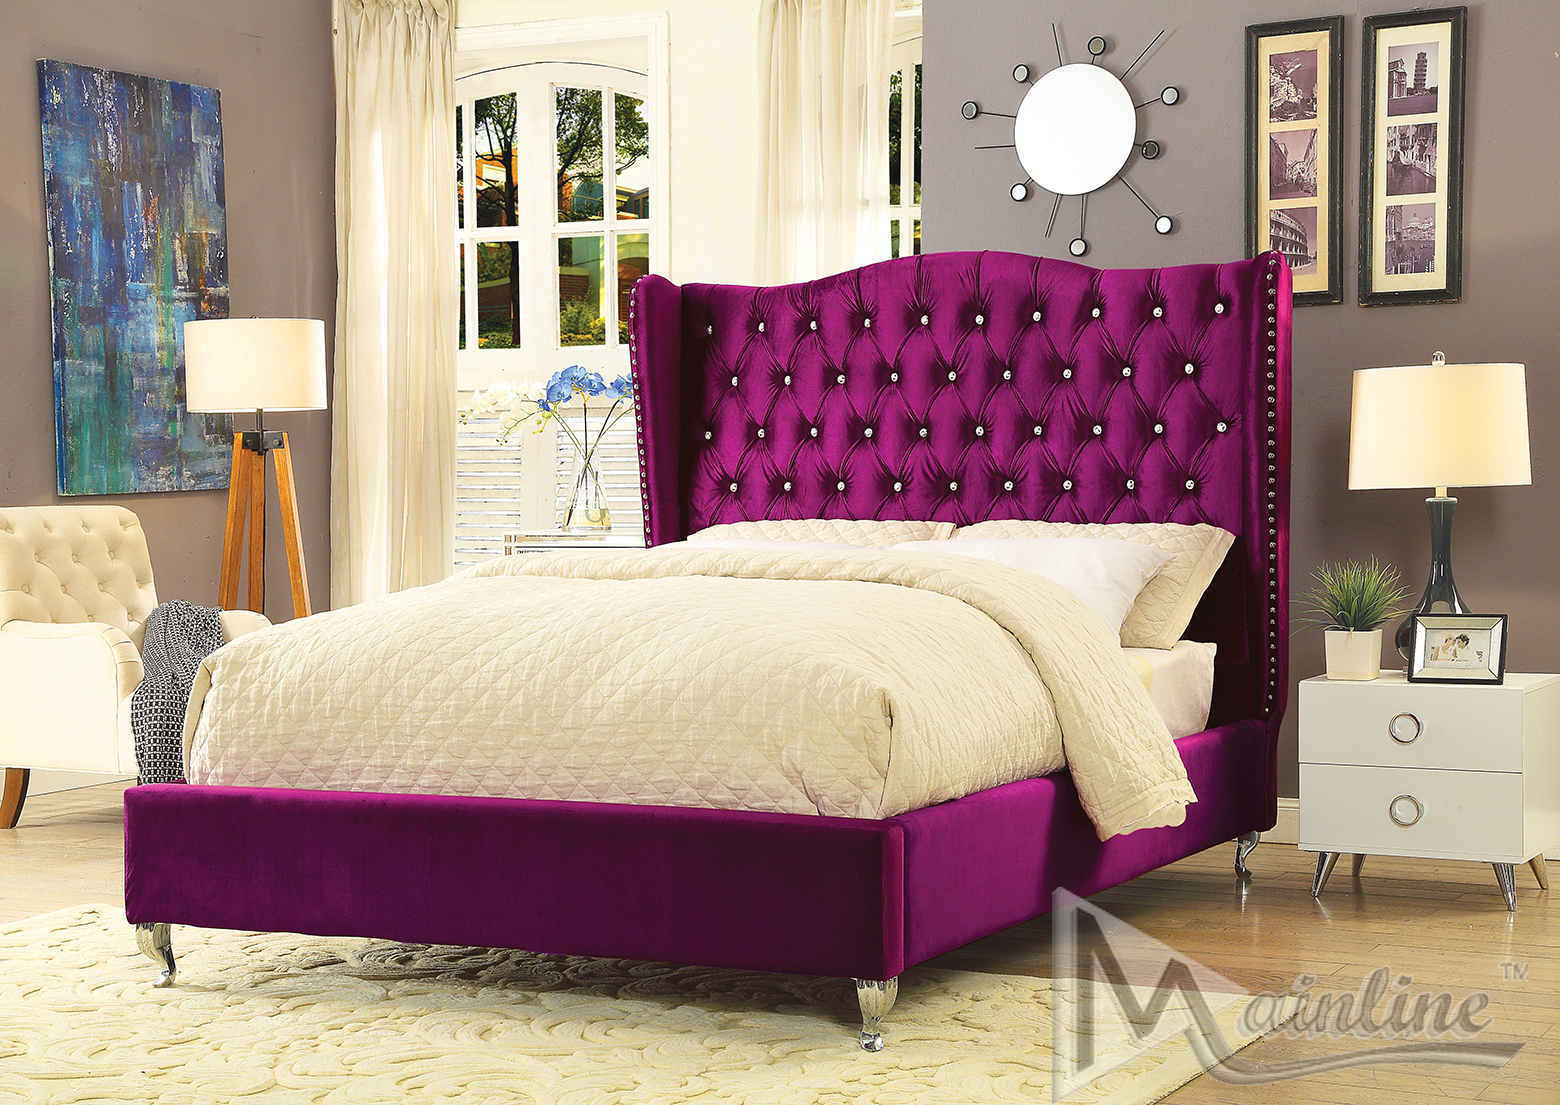 Mainline Violetta King Size Bed 89973, Purple King Size Bed Headboard